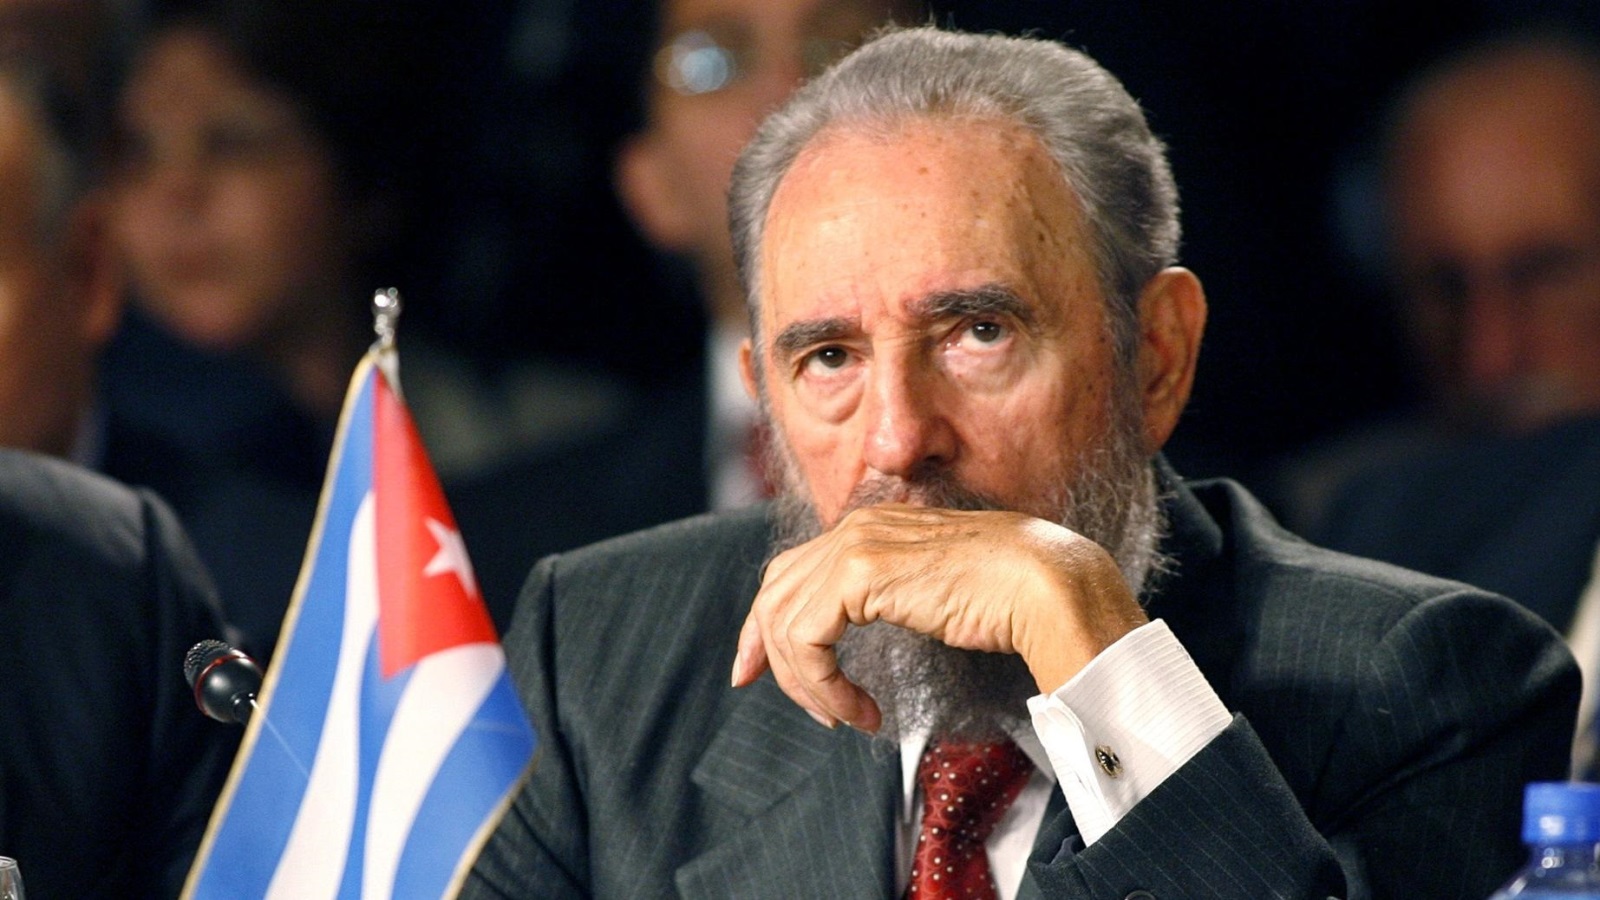 Cuba's President Fidel Castro attends a Mercosur trade bloc summit in Cordoba, Argentina in this July 21, 2006 file photo.   REUTERS/David Mercado/File Photo